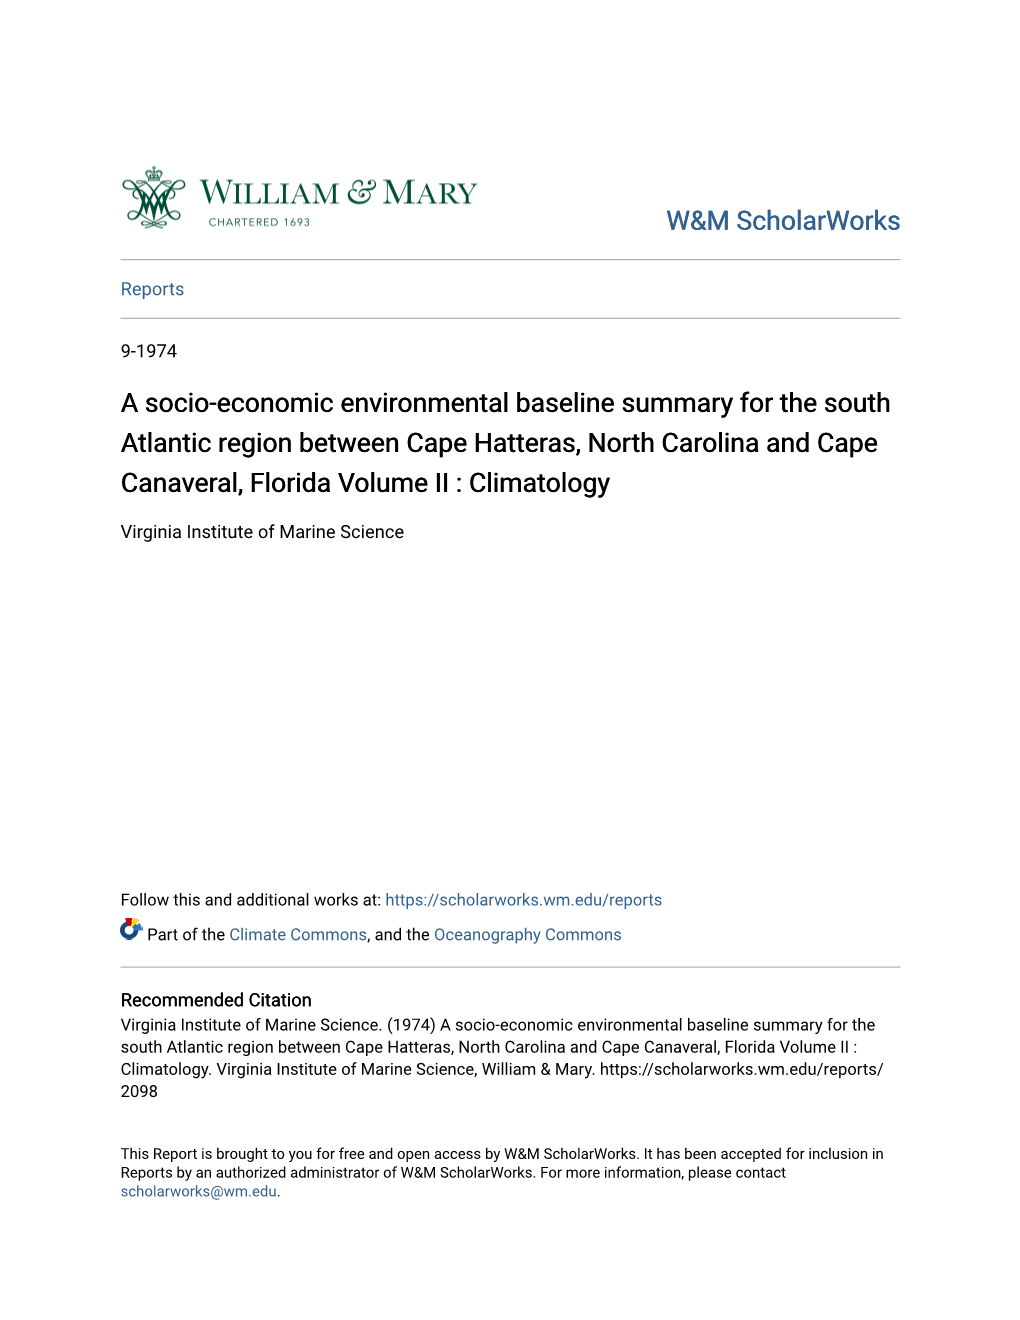 A Socio-Economic Environmental Baseline Summary for the South